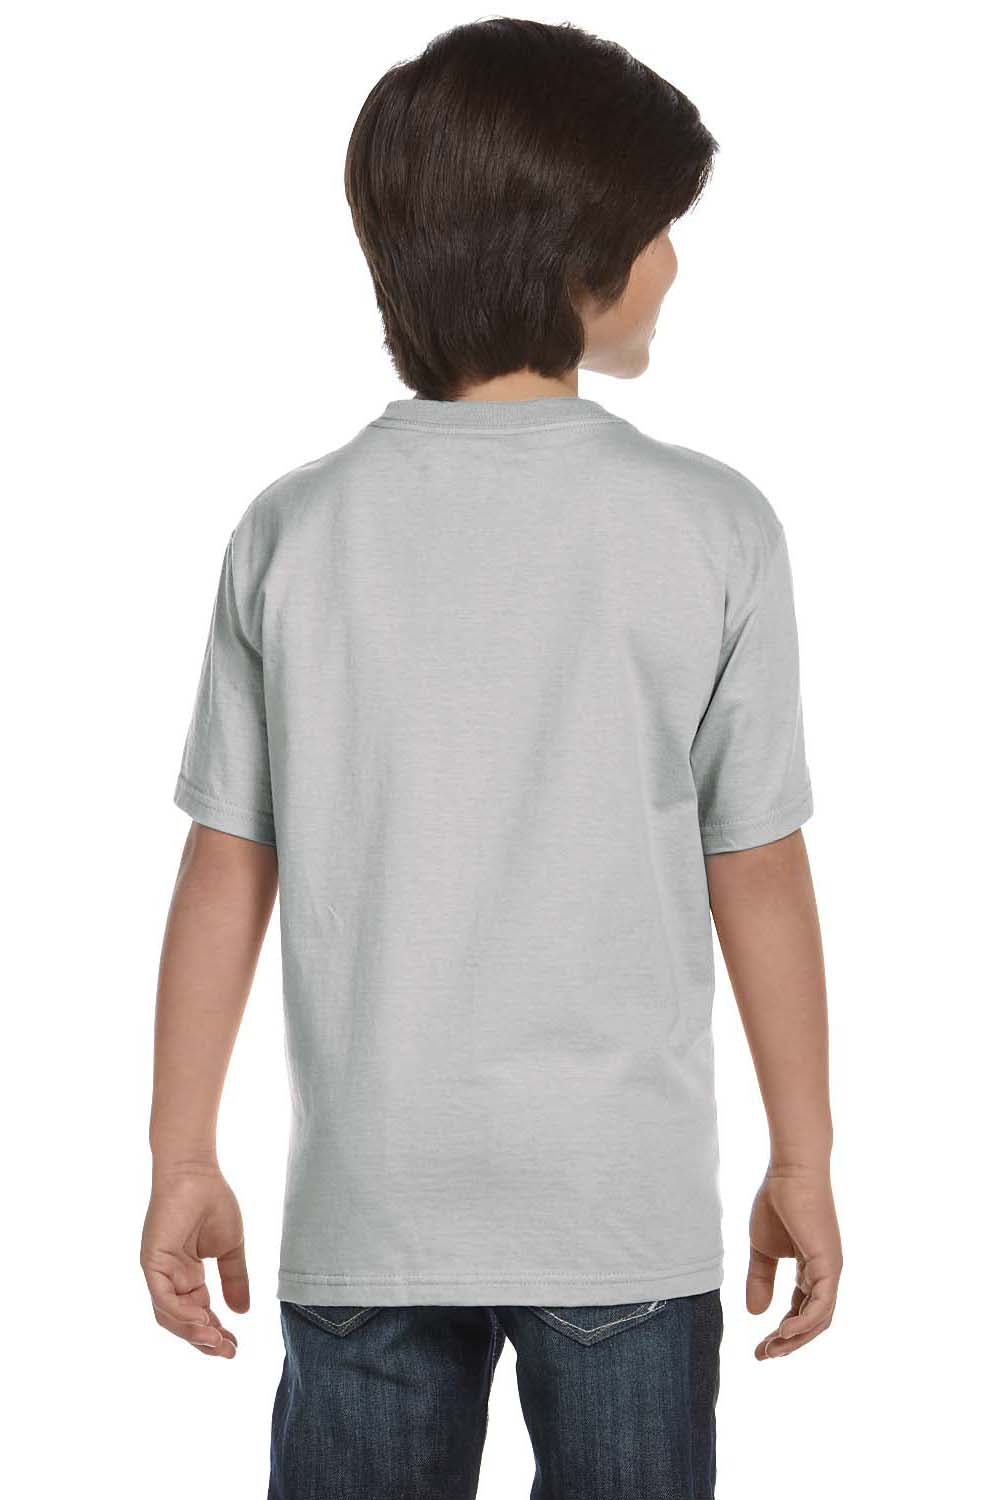 Hanes 5480 Youth ComfortSoft Short Sleeve Crewneck T-Shirt Light Steel Grey Back